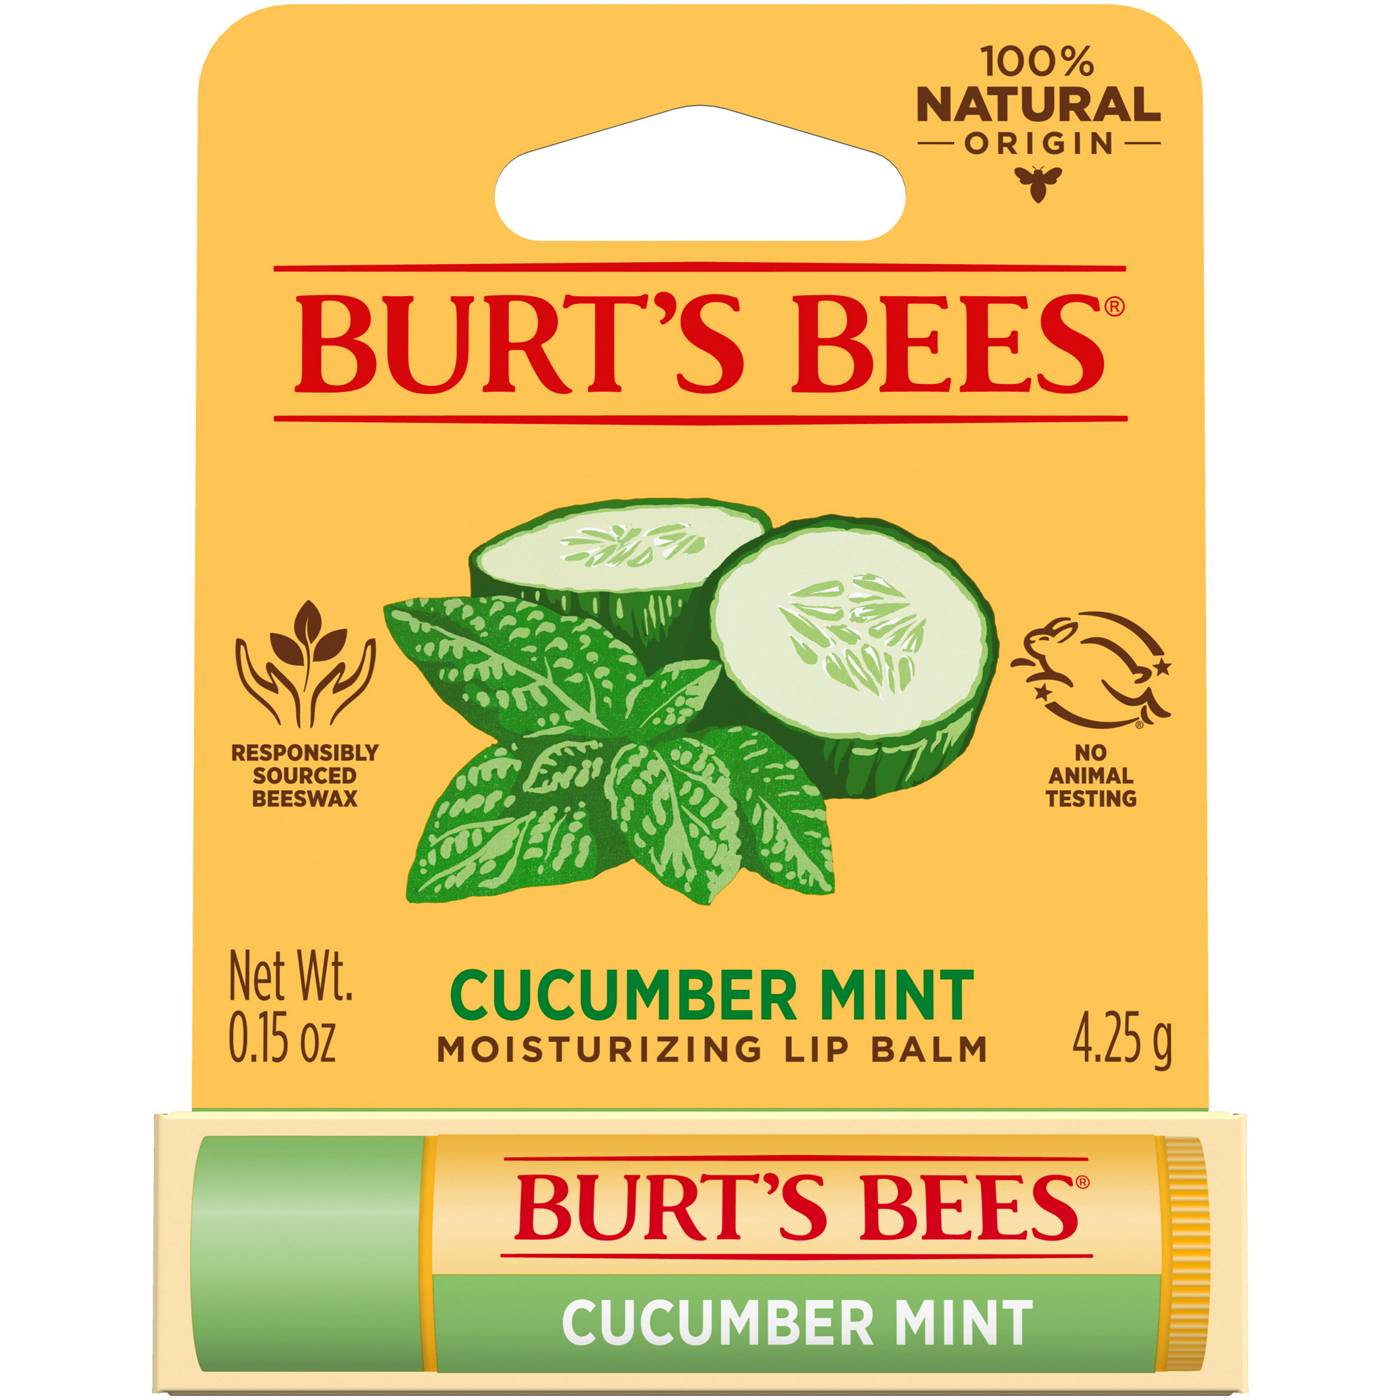 Burt's Bees Cucumber Mint Moisturizing Lip Balm ; image 1 of 12